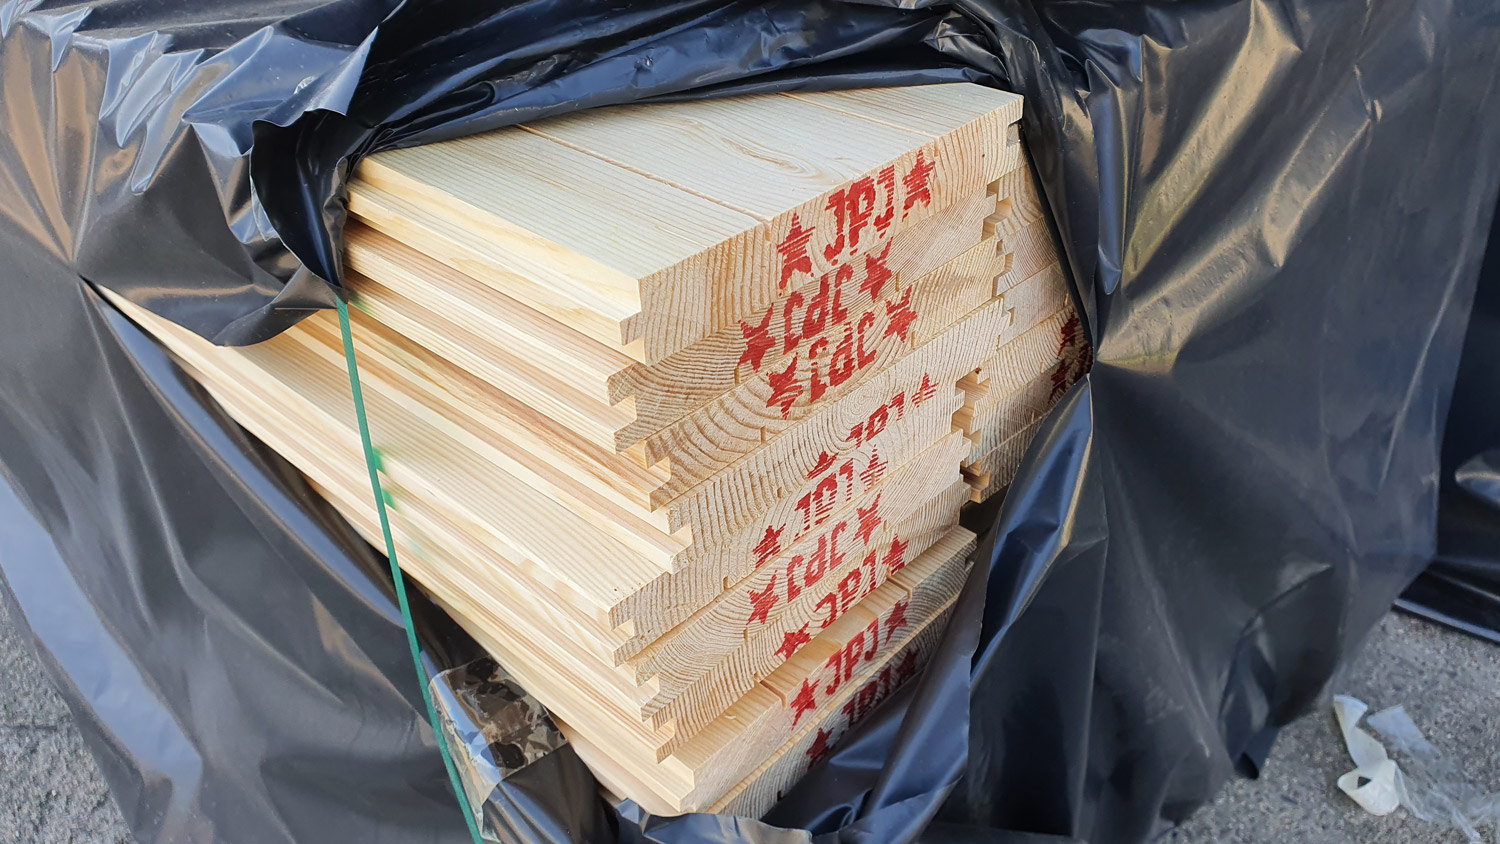 Massivholzdiele Kiefer rustikal+, 27x193mm, Länge 5,10m, gehobelt, 2-seitig Nut + Feder